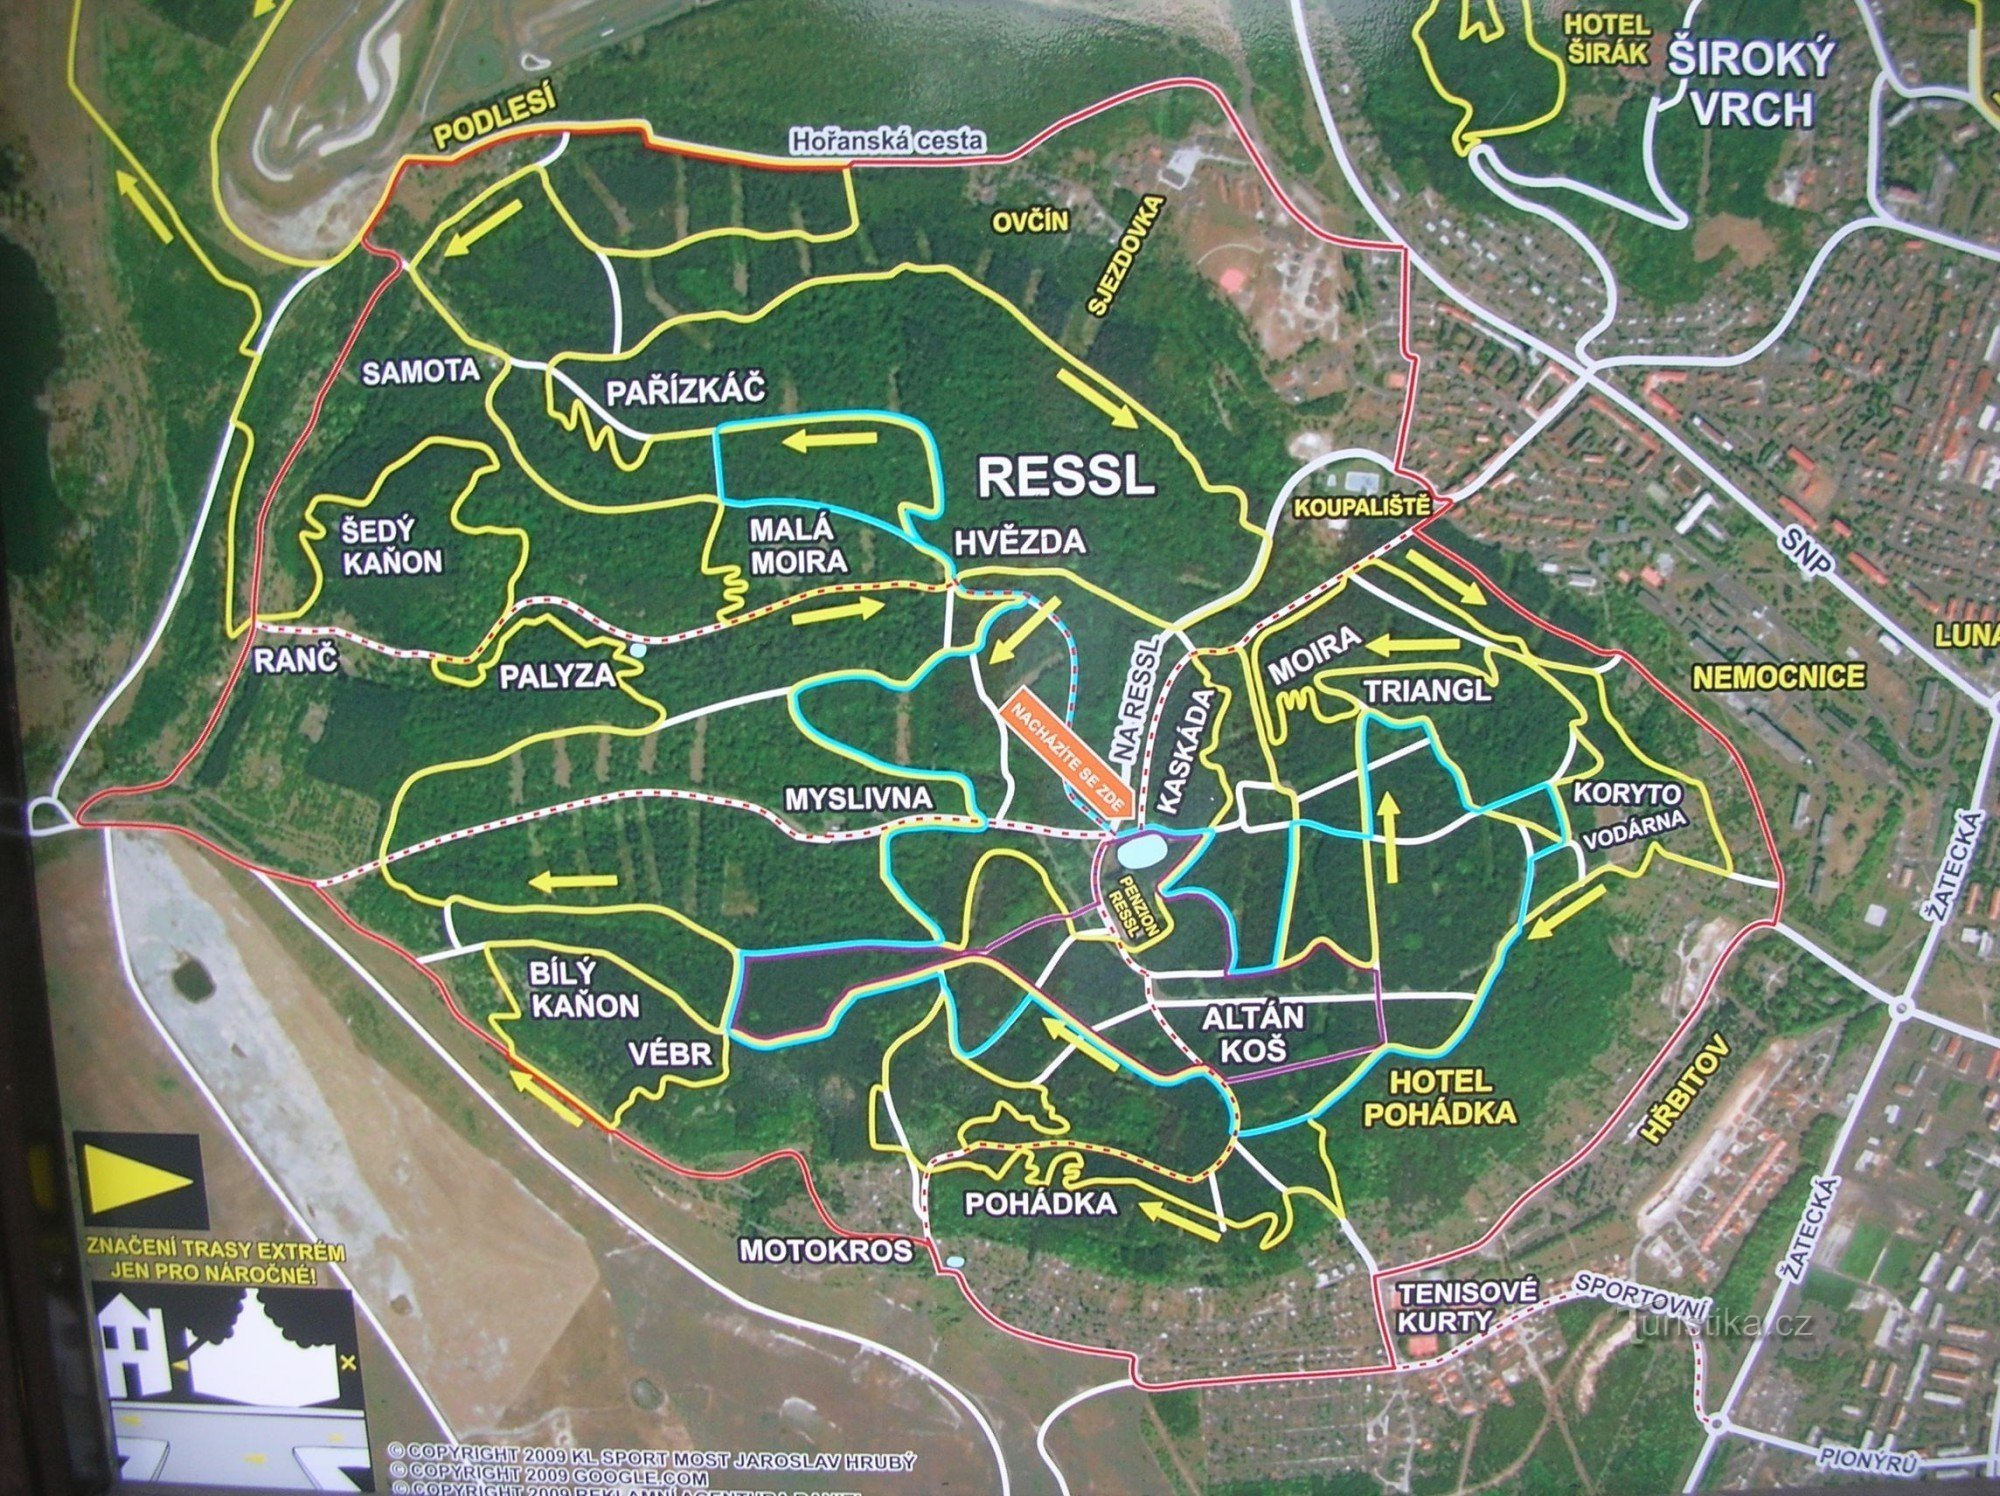 Park Ressl på kortet